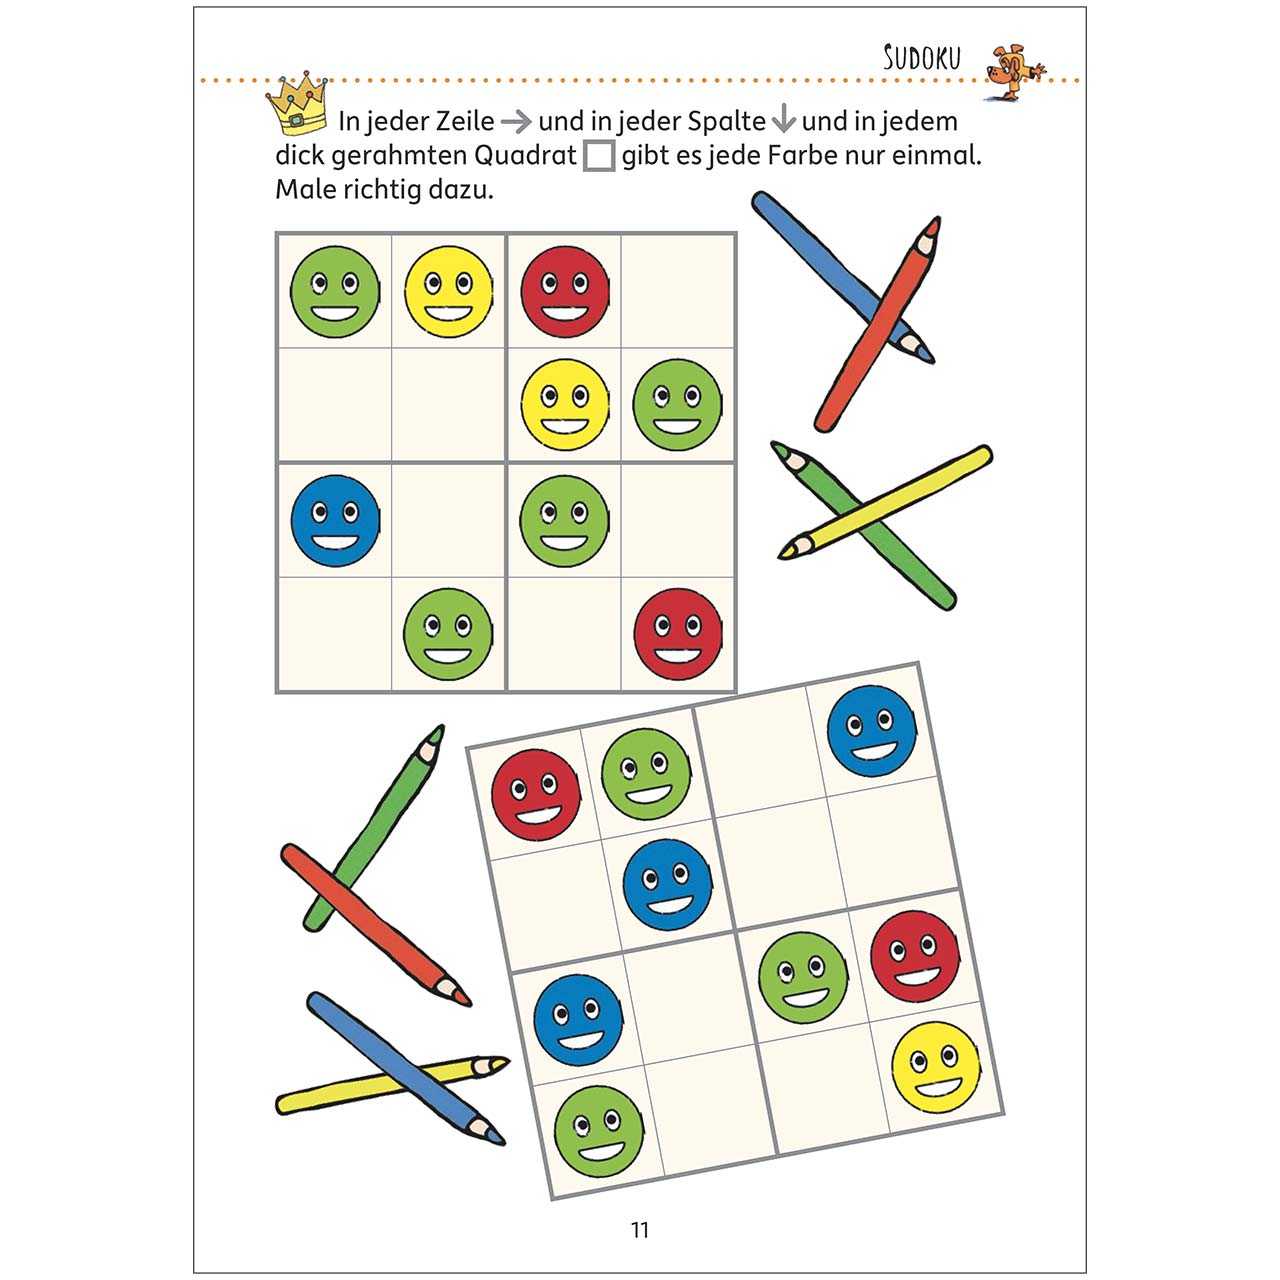 Rätselblock – Rätselspaß für Kinder ab 5 Jahre Bd 1